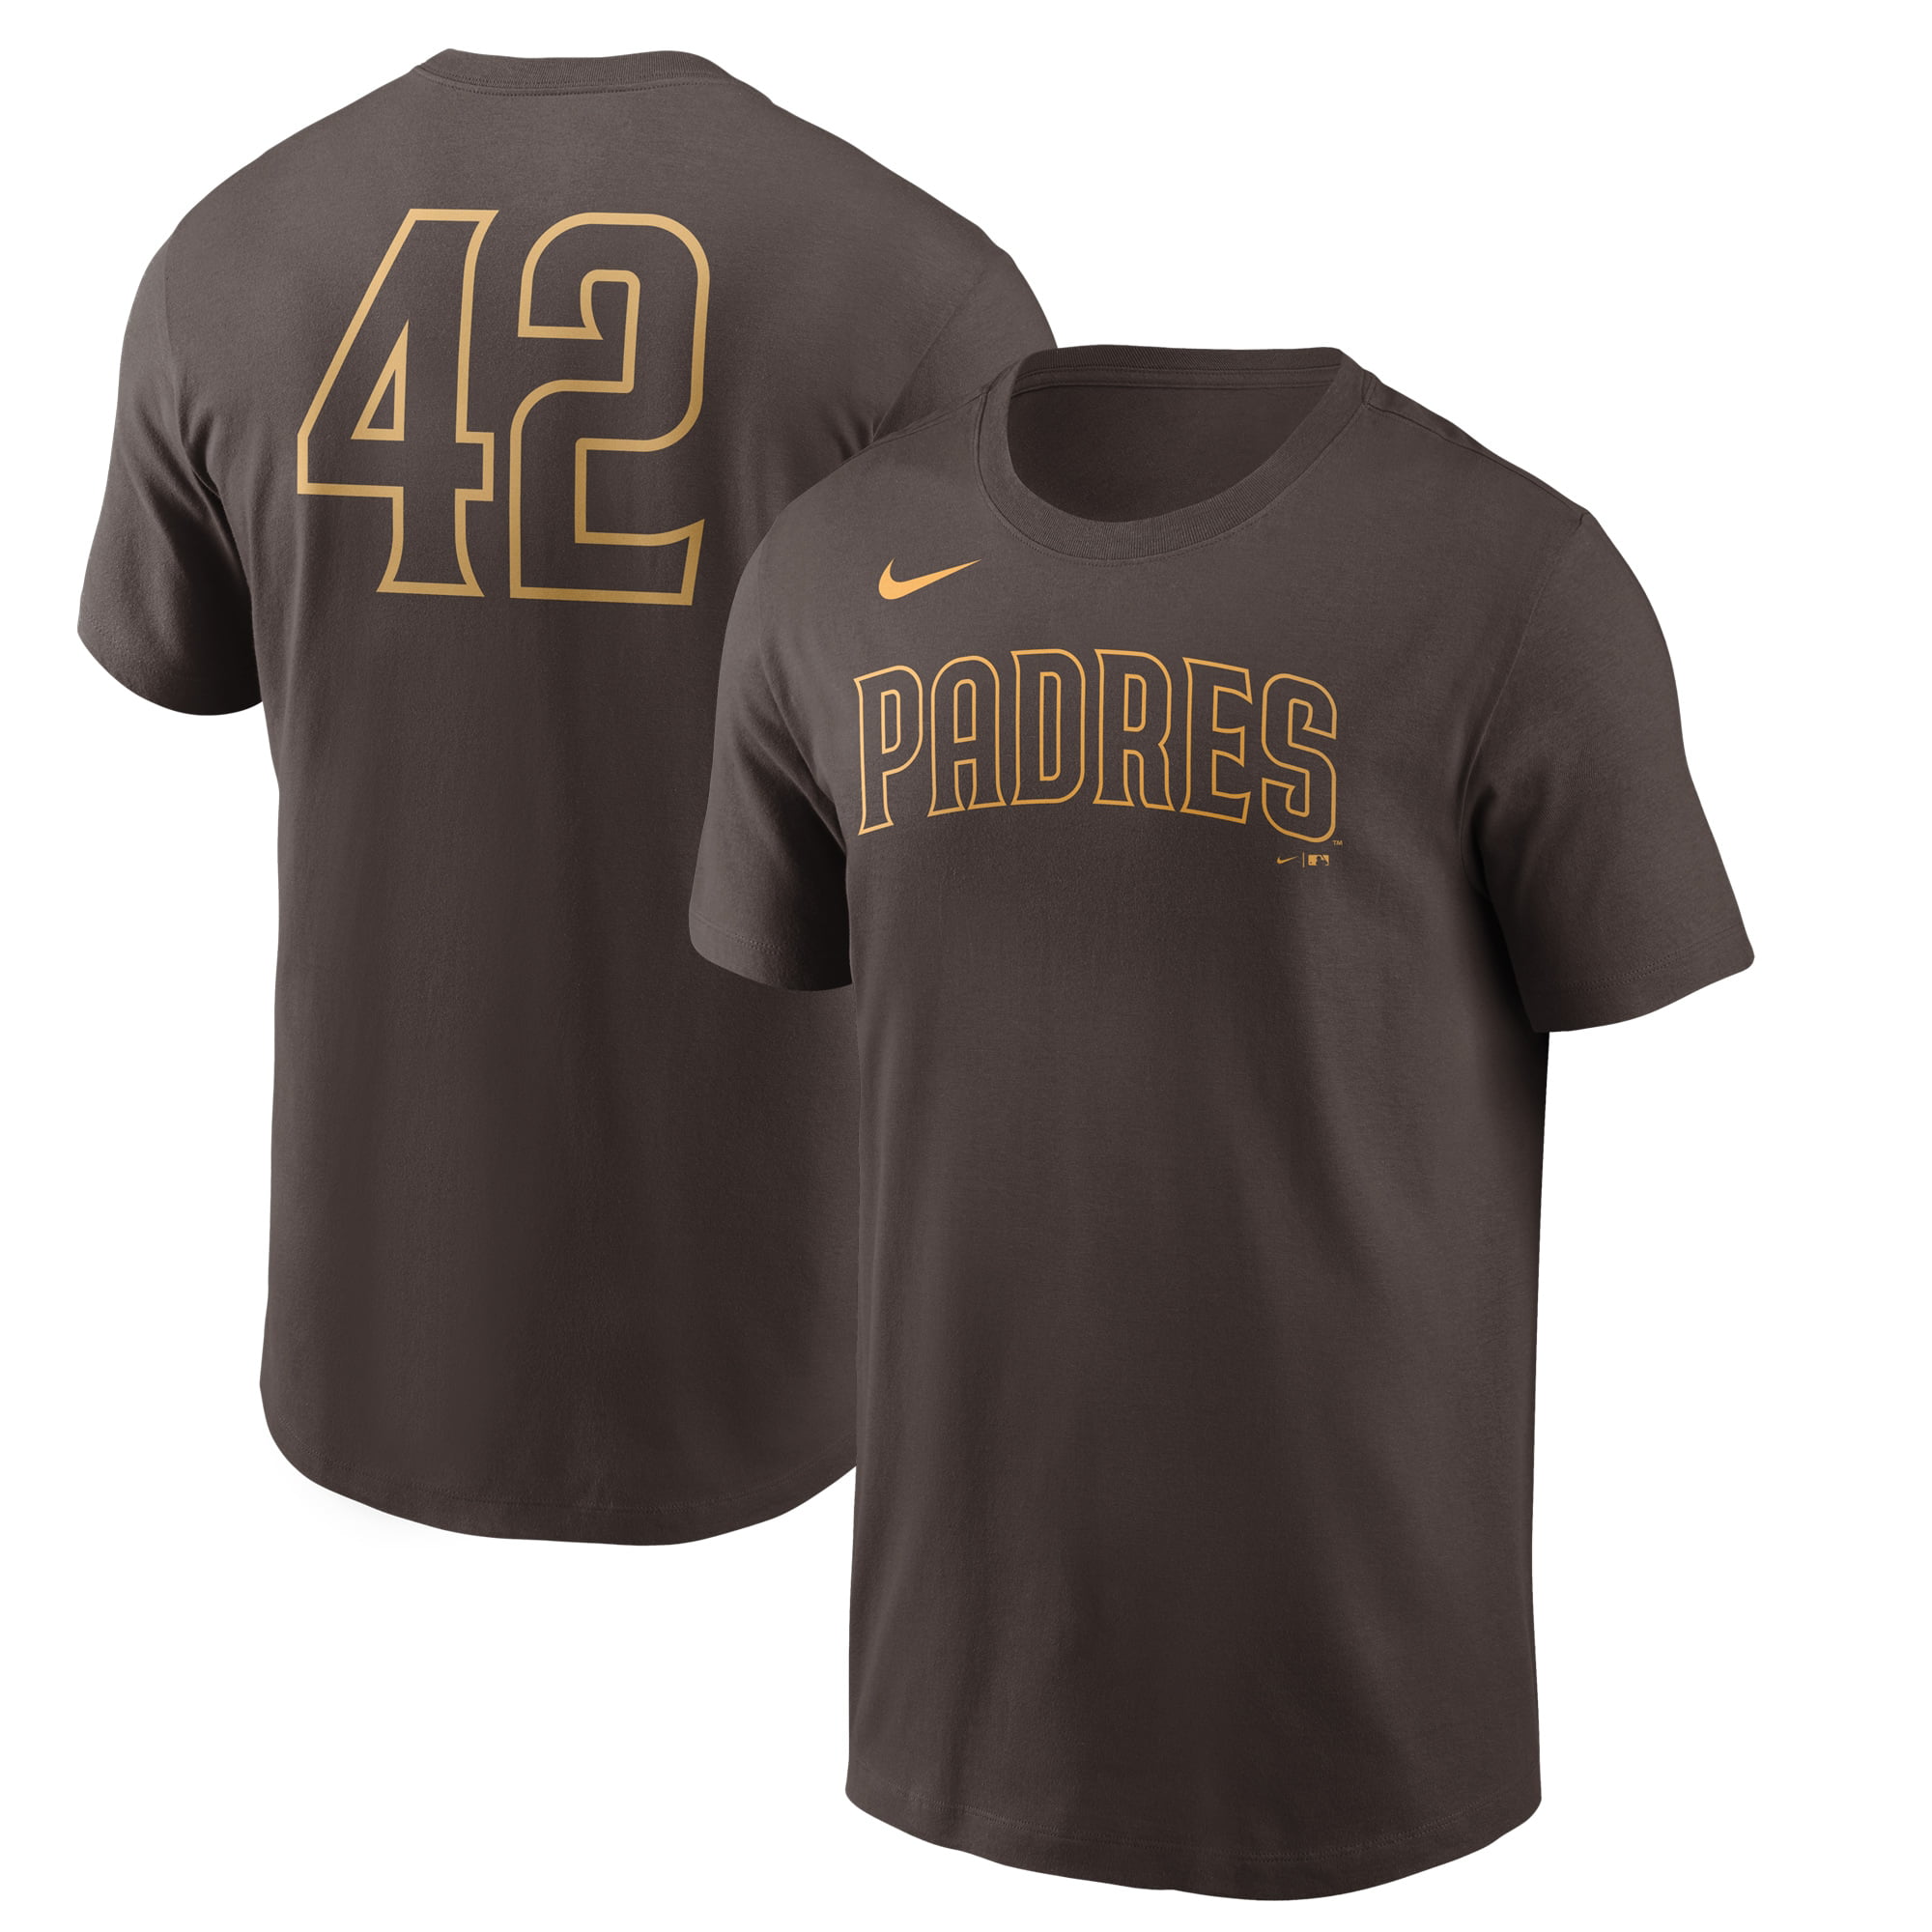 San Diego Padres Nike Jackie Robinson Day Team 42 T-Shirt - Brown